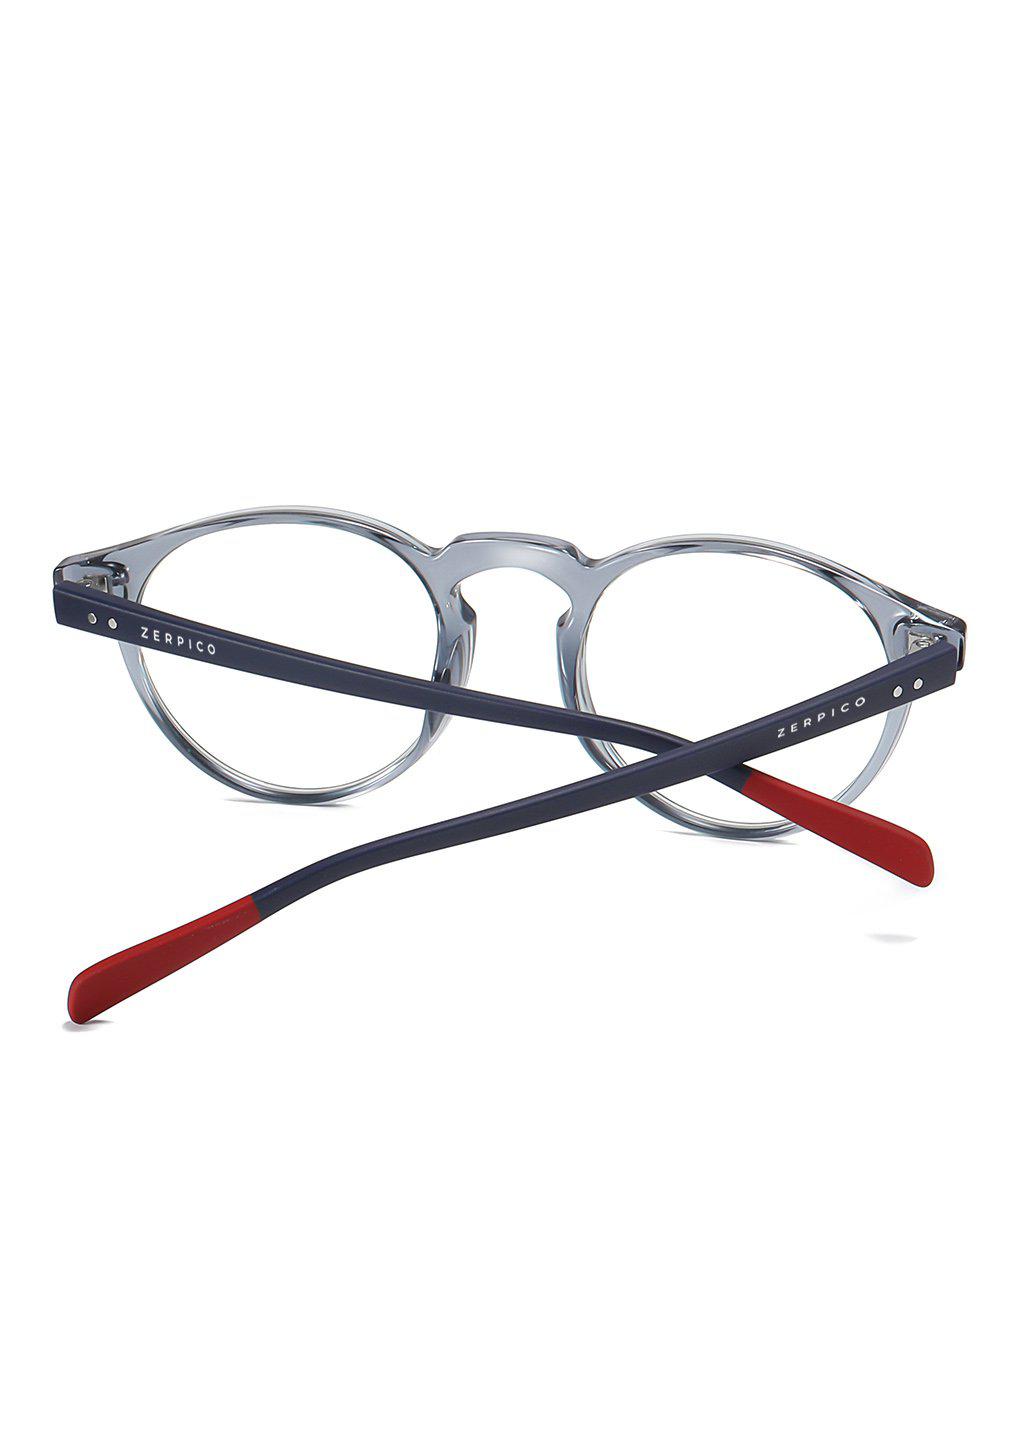 Nexus - Blue-light glasses - Holo-14